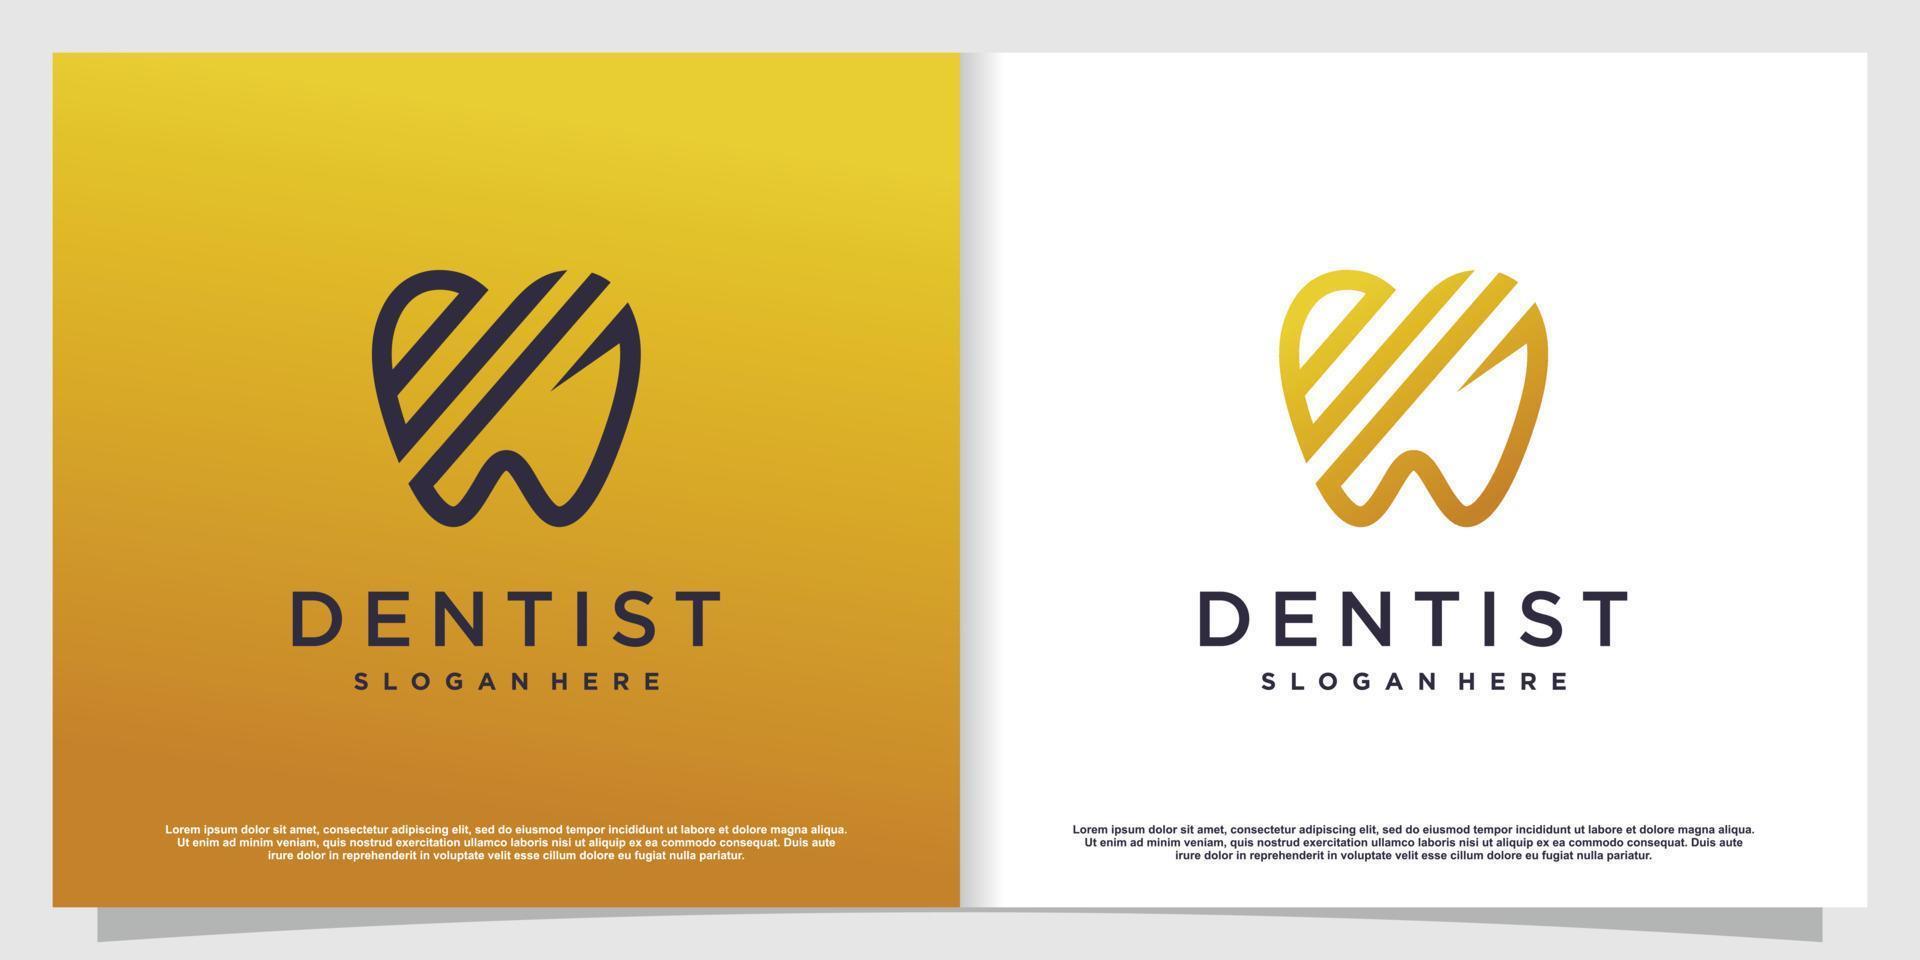 Dental logo design with creative element style Premium Vector part 12